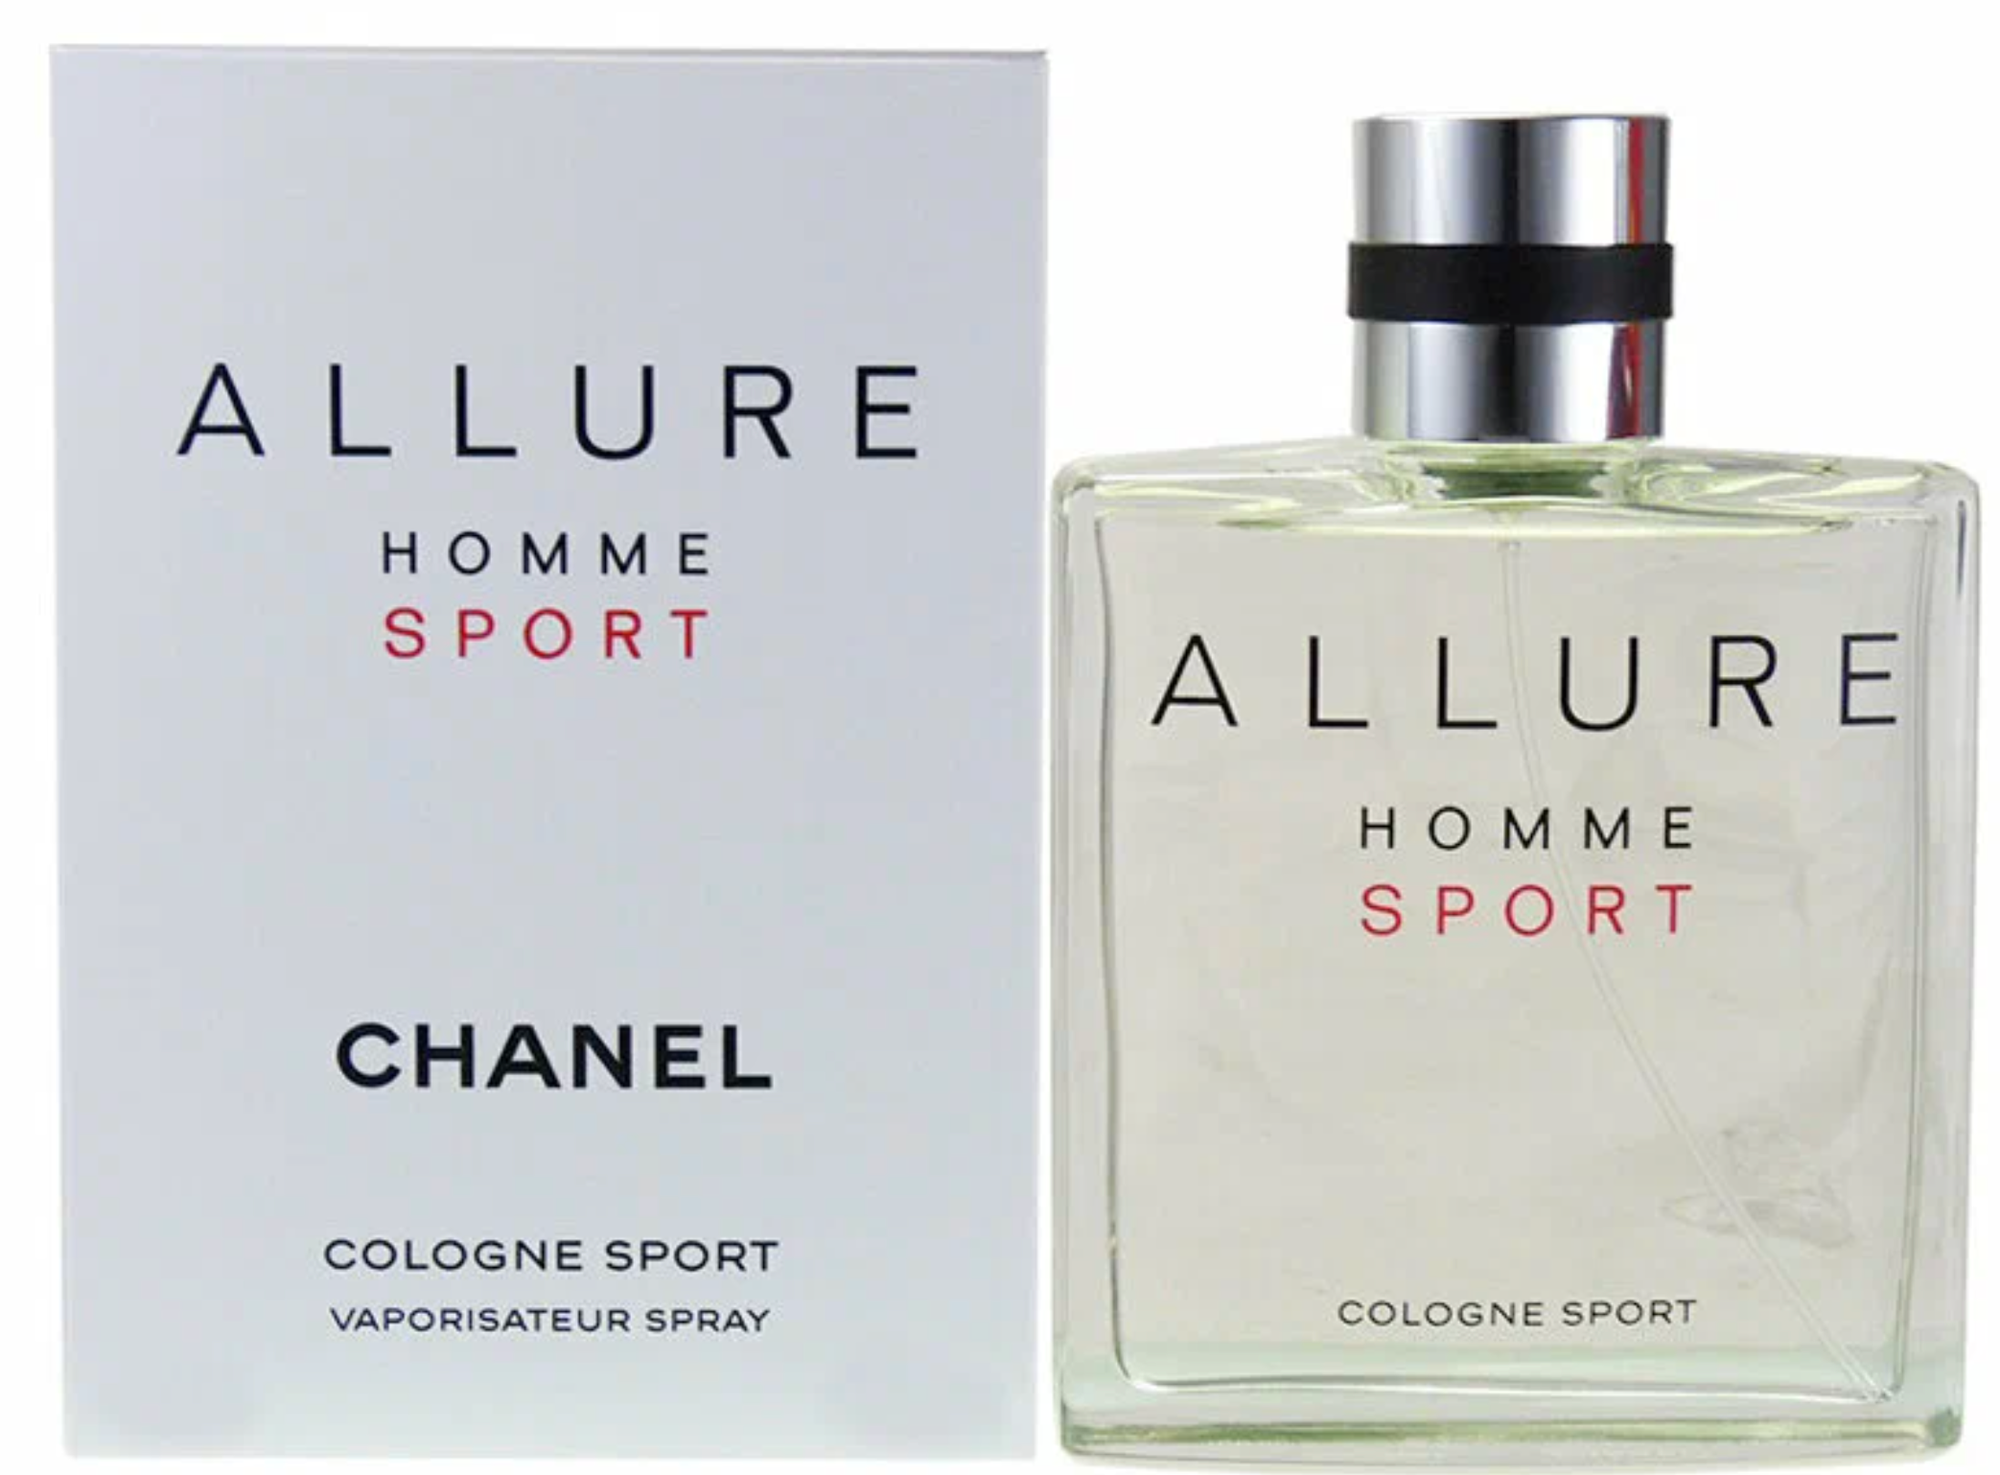 Chanel мужской одеколон Allure Homme Sport Cologne, Франция, 100 мл